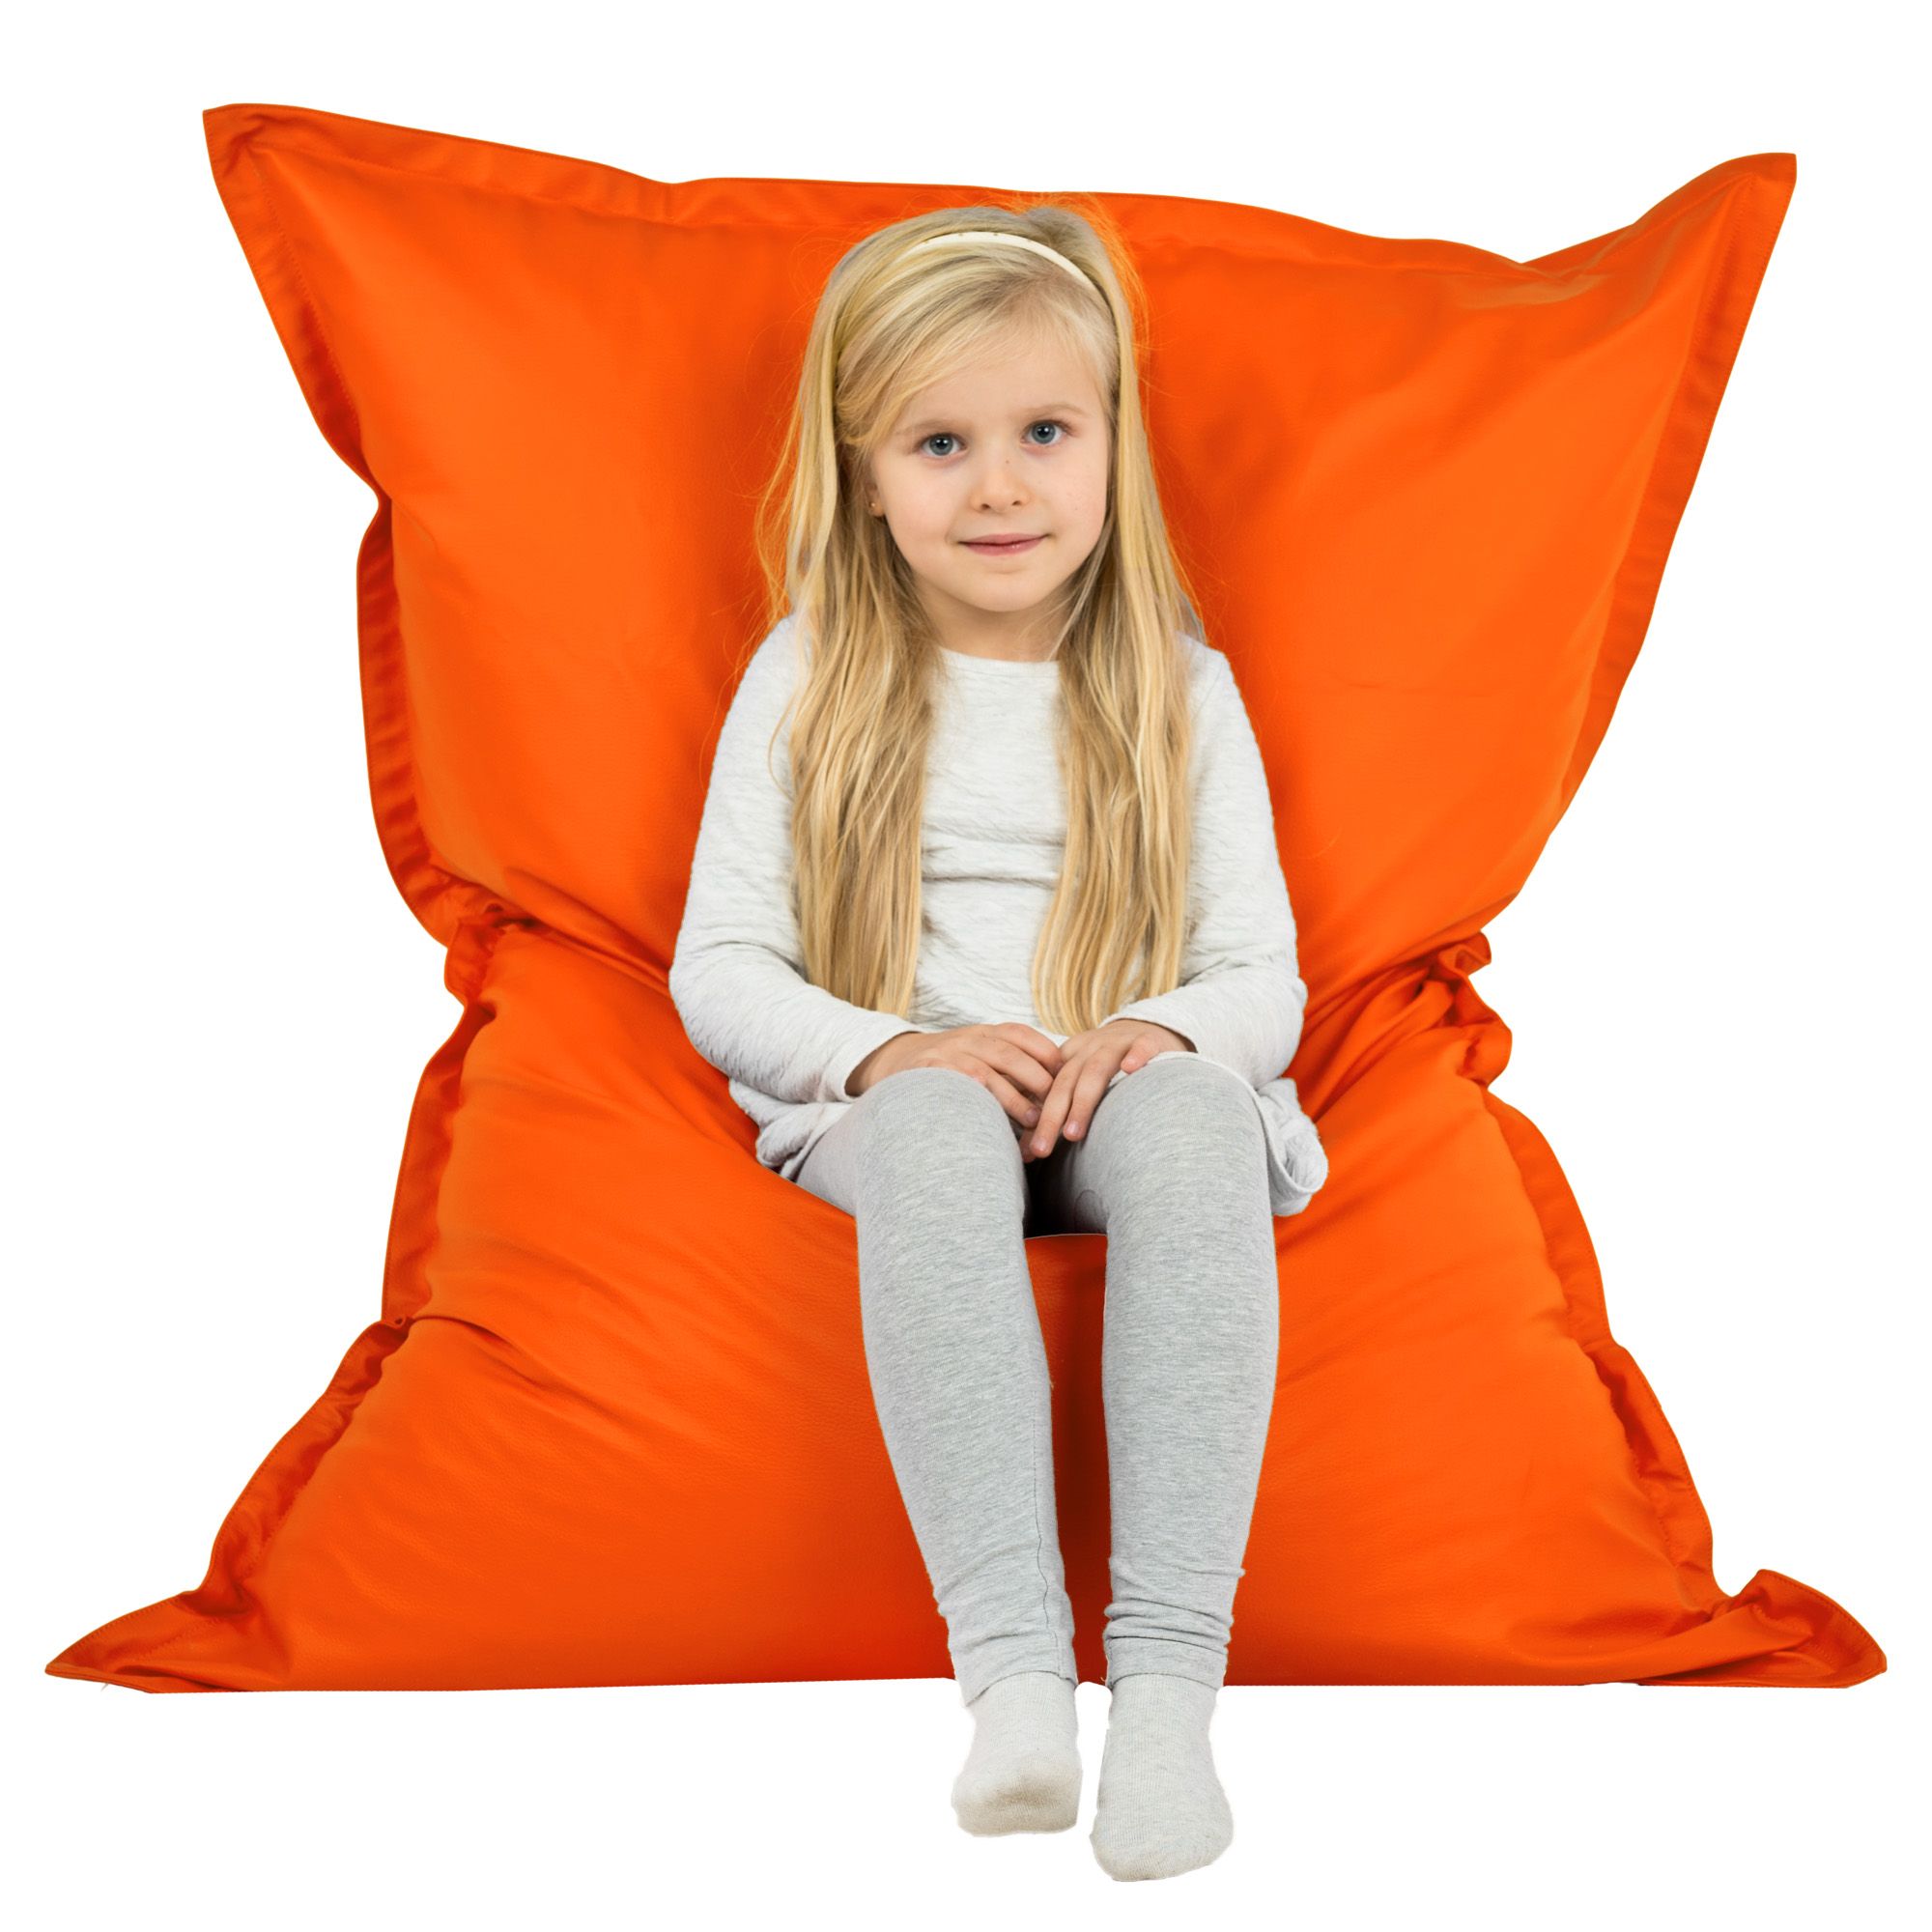 Cuscino gigante per bambini arancione ecopelle morbida. Pouf sacco